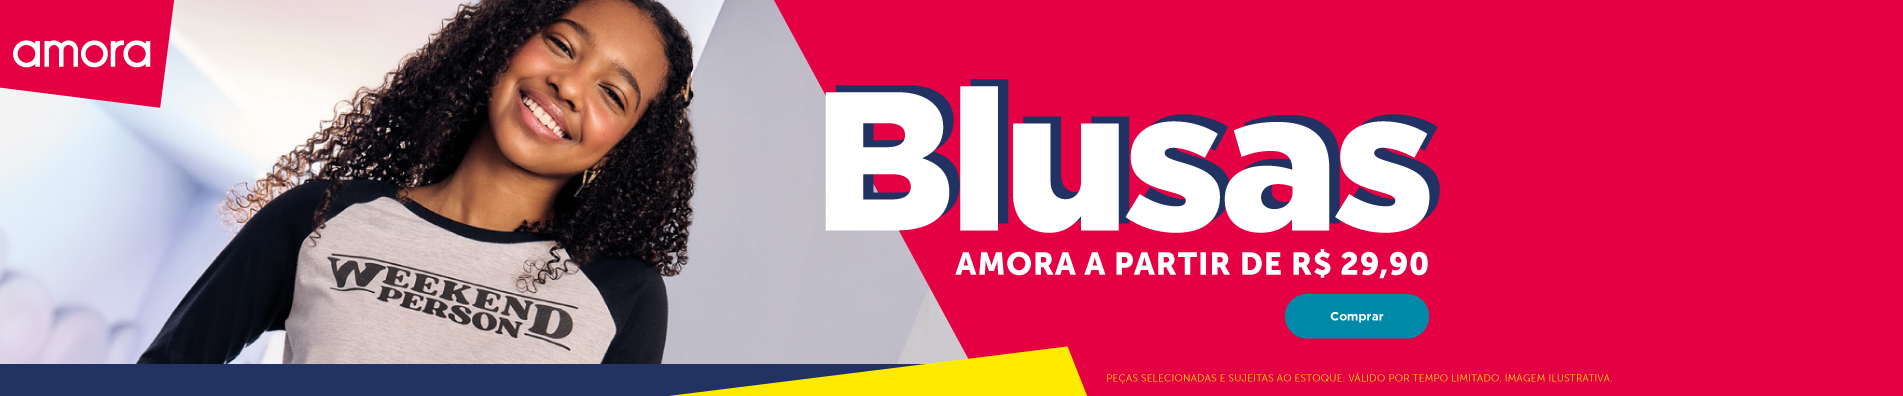 BANNER N1.b - DESKTOP Blusas Amora a partir de R$29,90